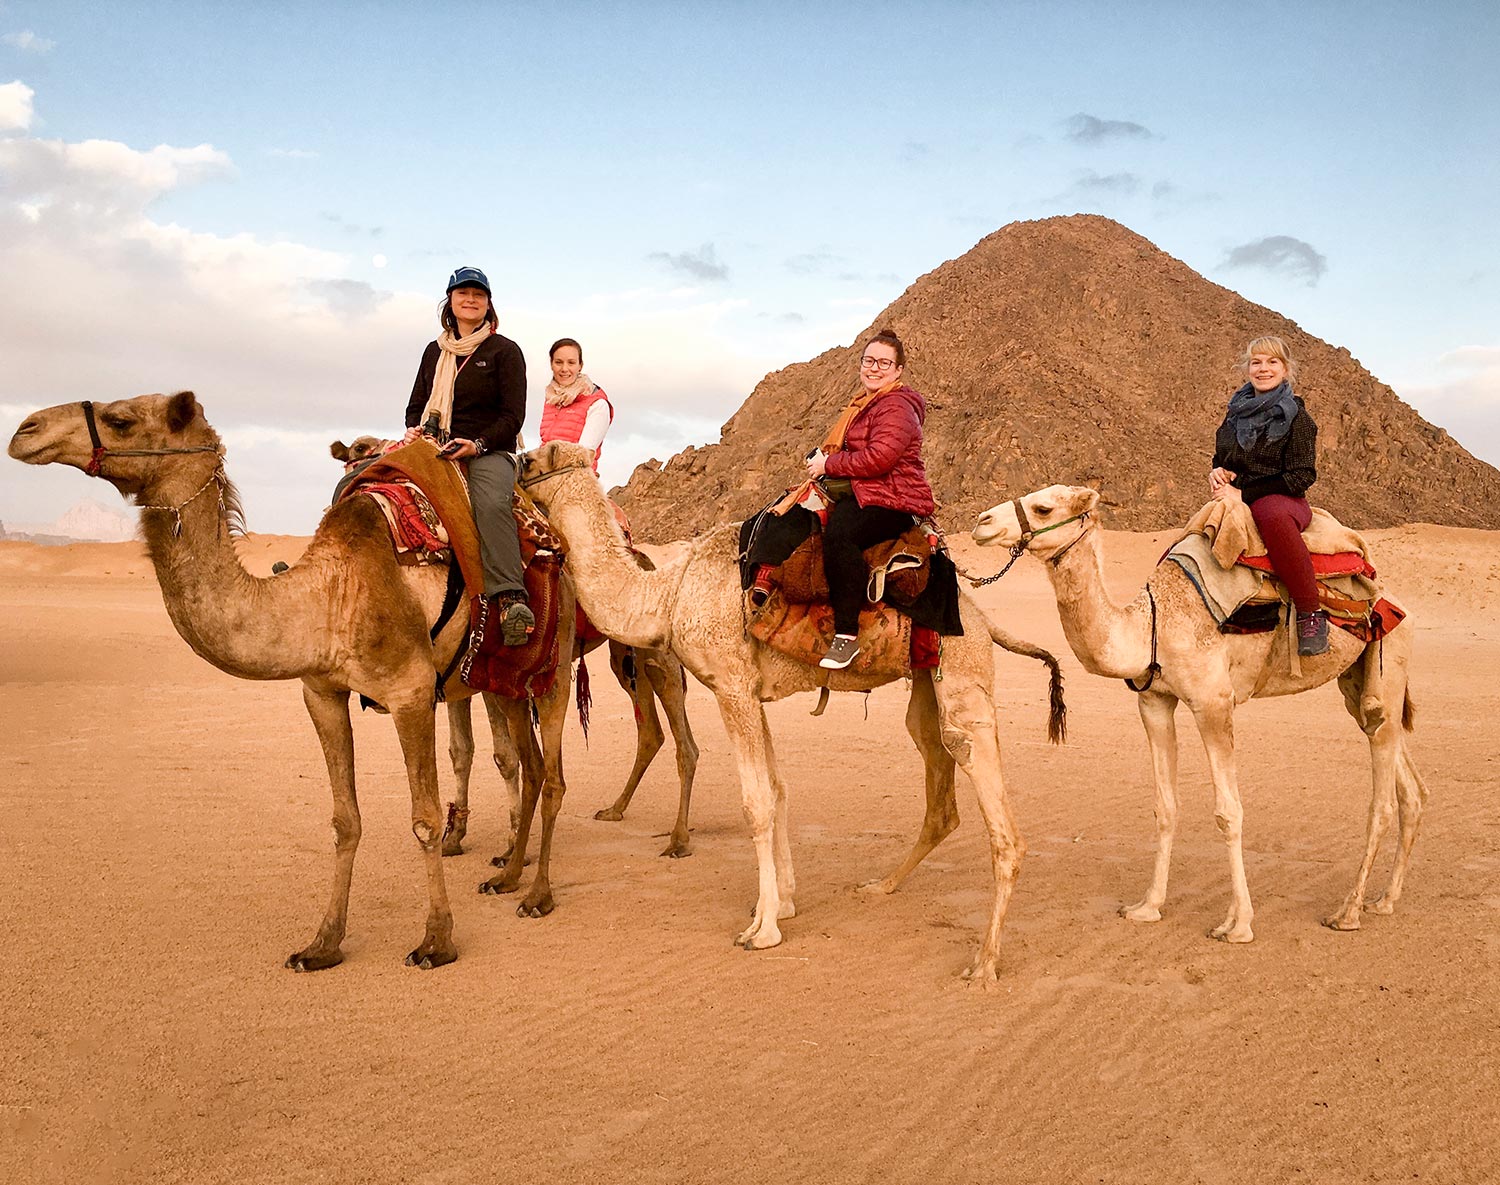 Groupe de G Adventures, Highlights of Jordan, Wadi Rum, Jordanie / G Adventures group, Highlights of Jordan, Wadi Rum, Jordan